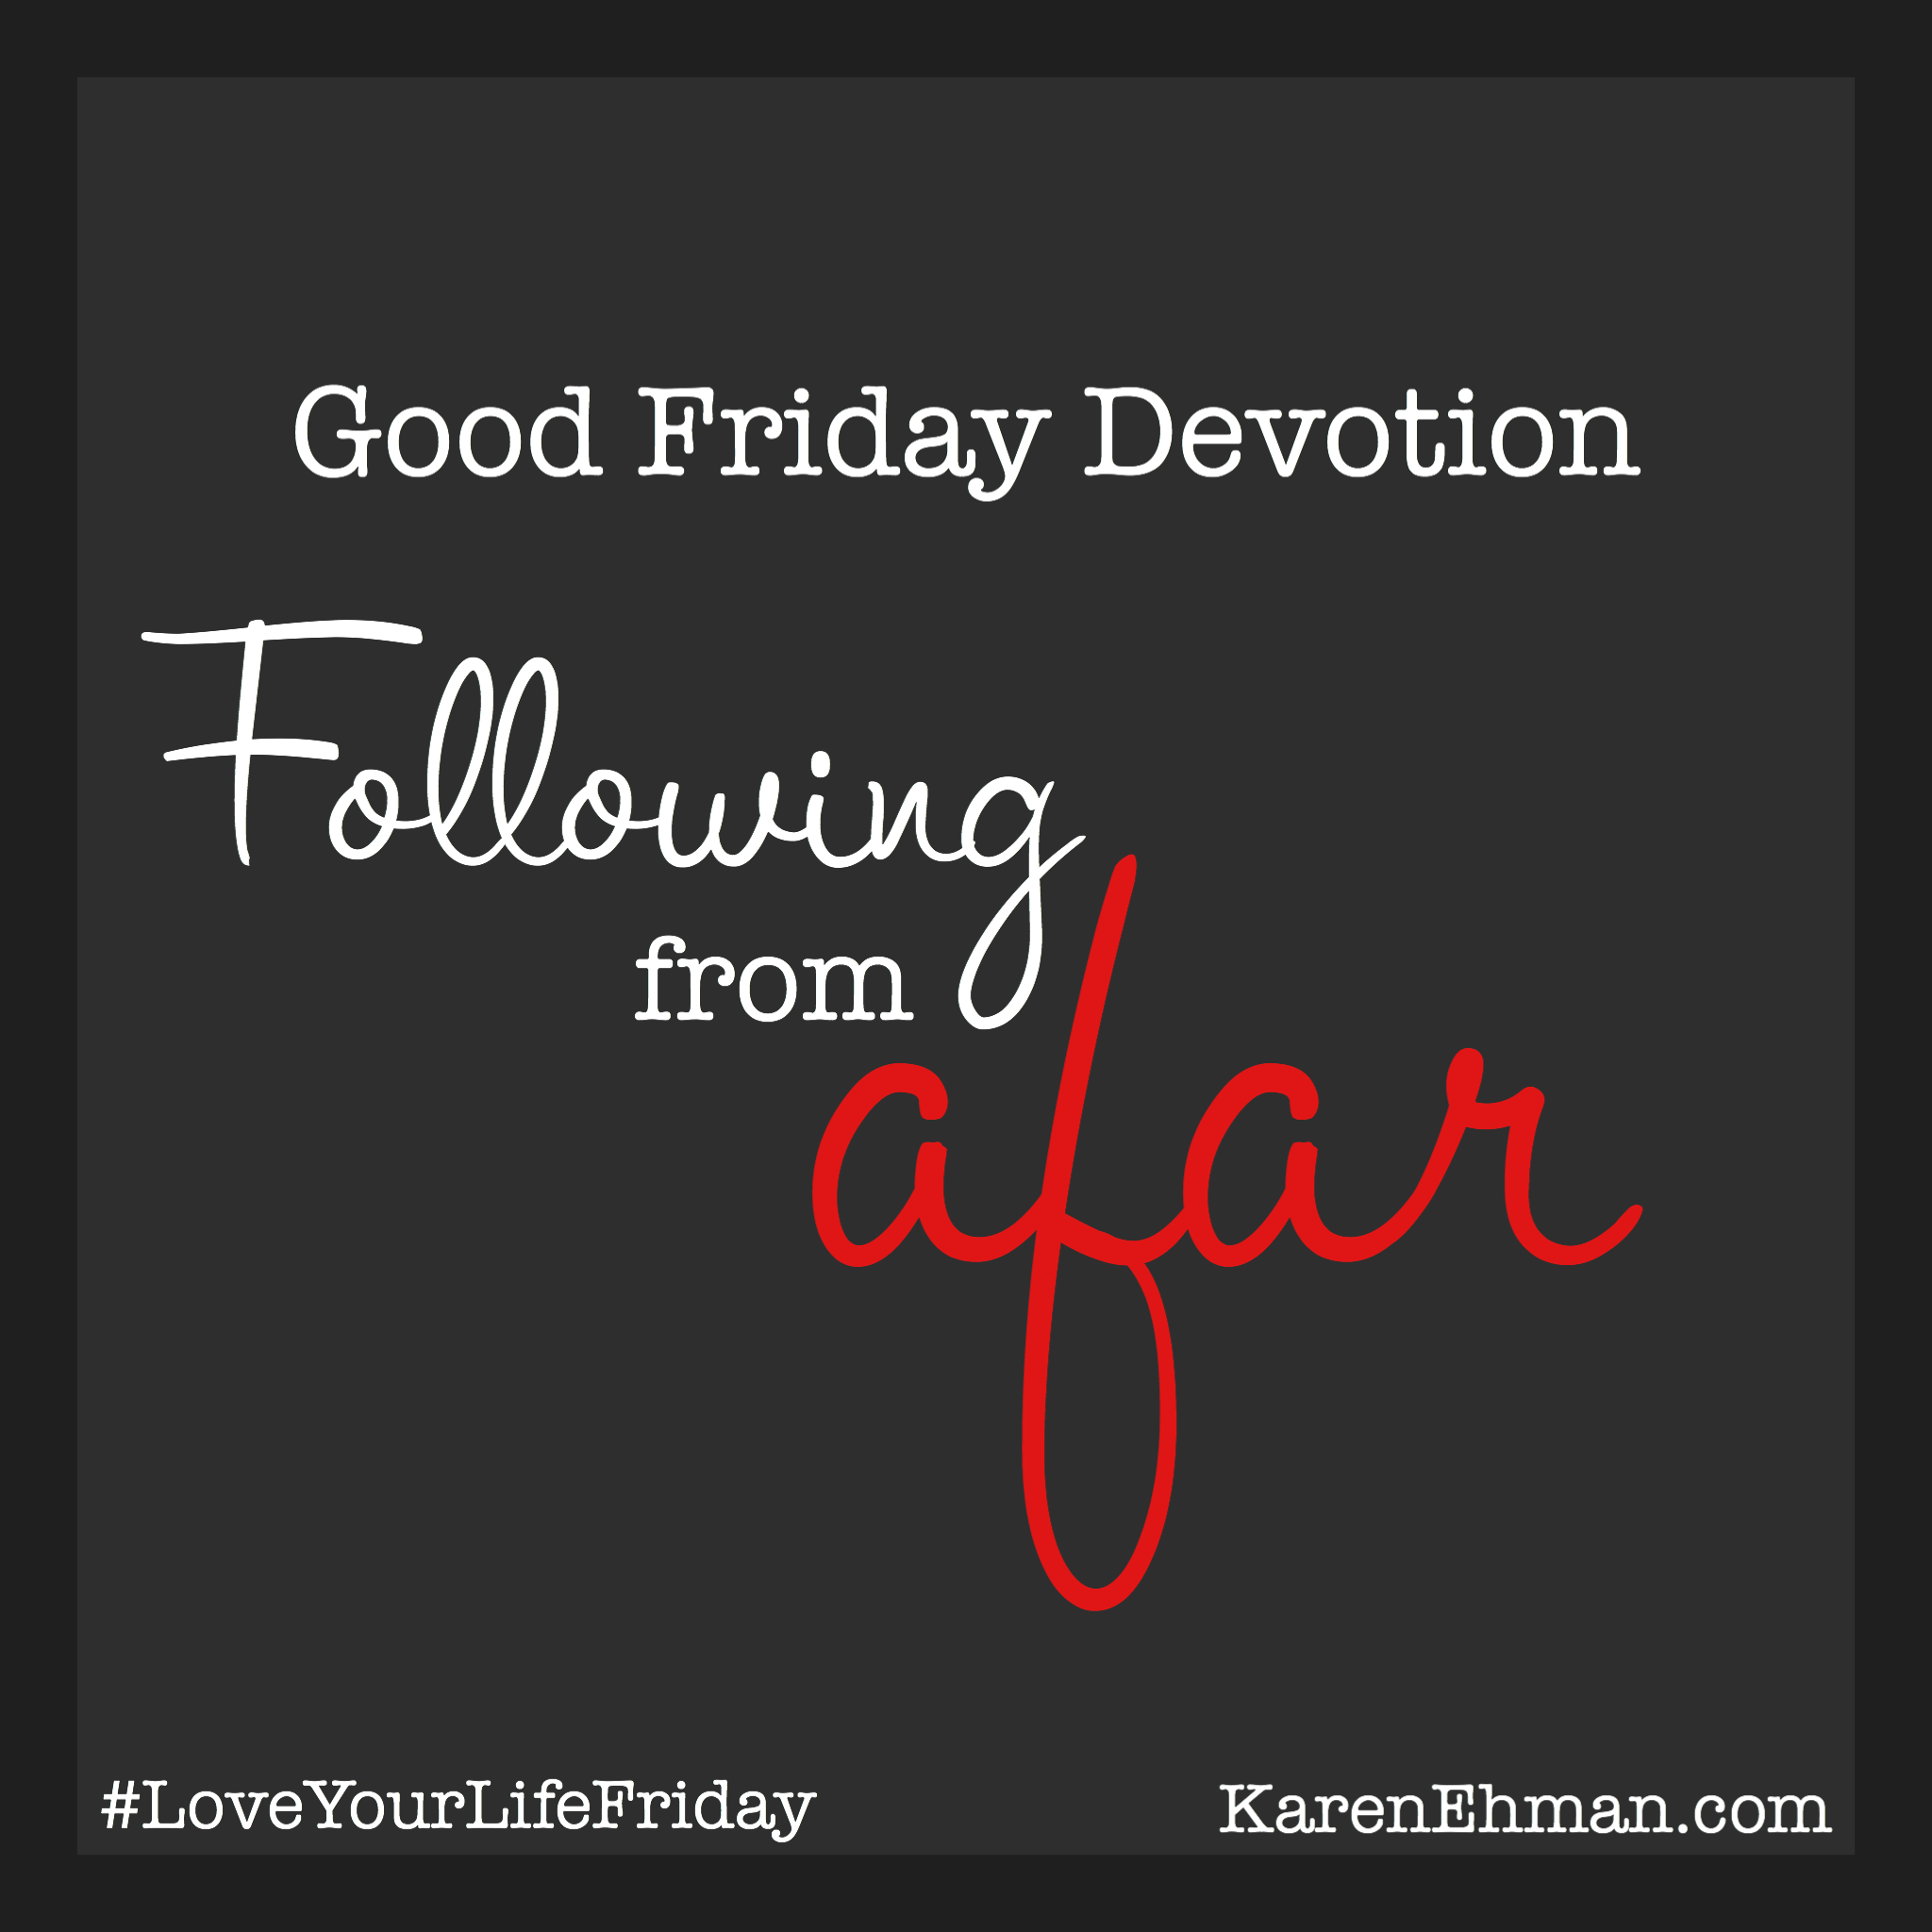 Good Friday Devotion: Following from Afar at KarenEhman.com